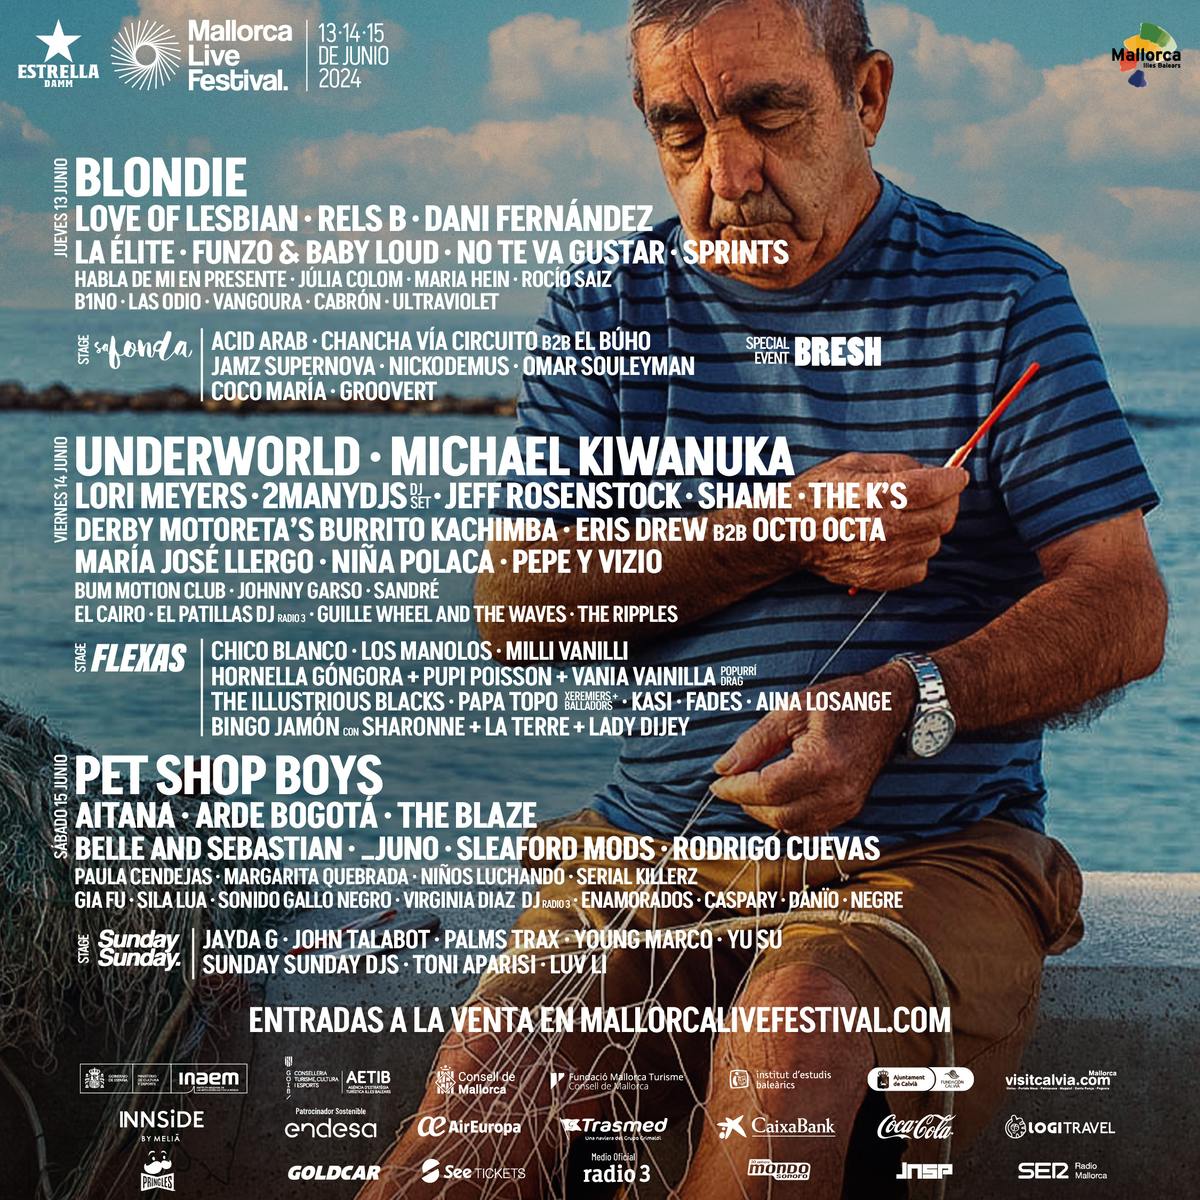 3-dagenkaart Mallorca Live Festival 2024